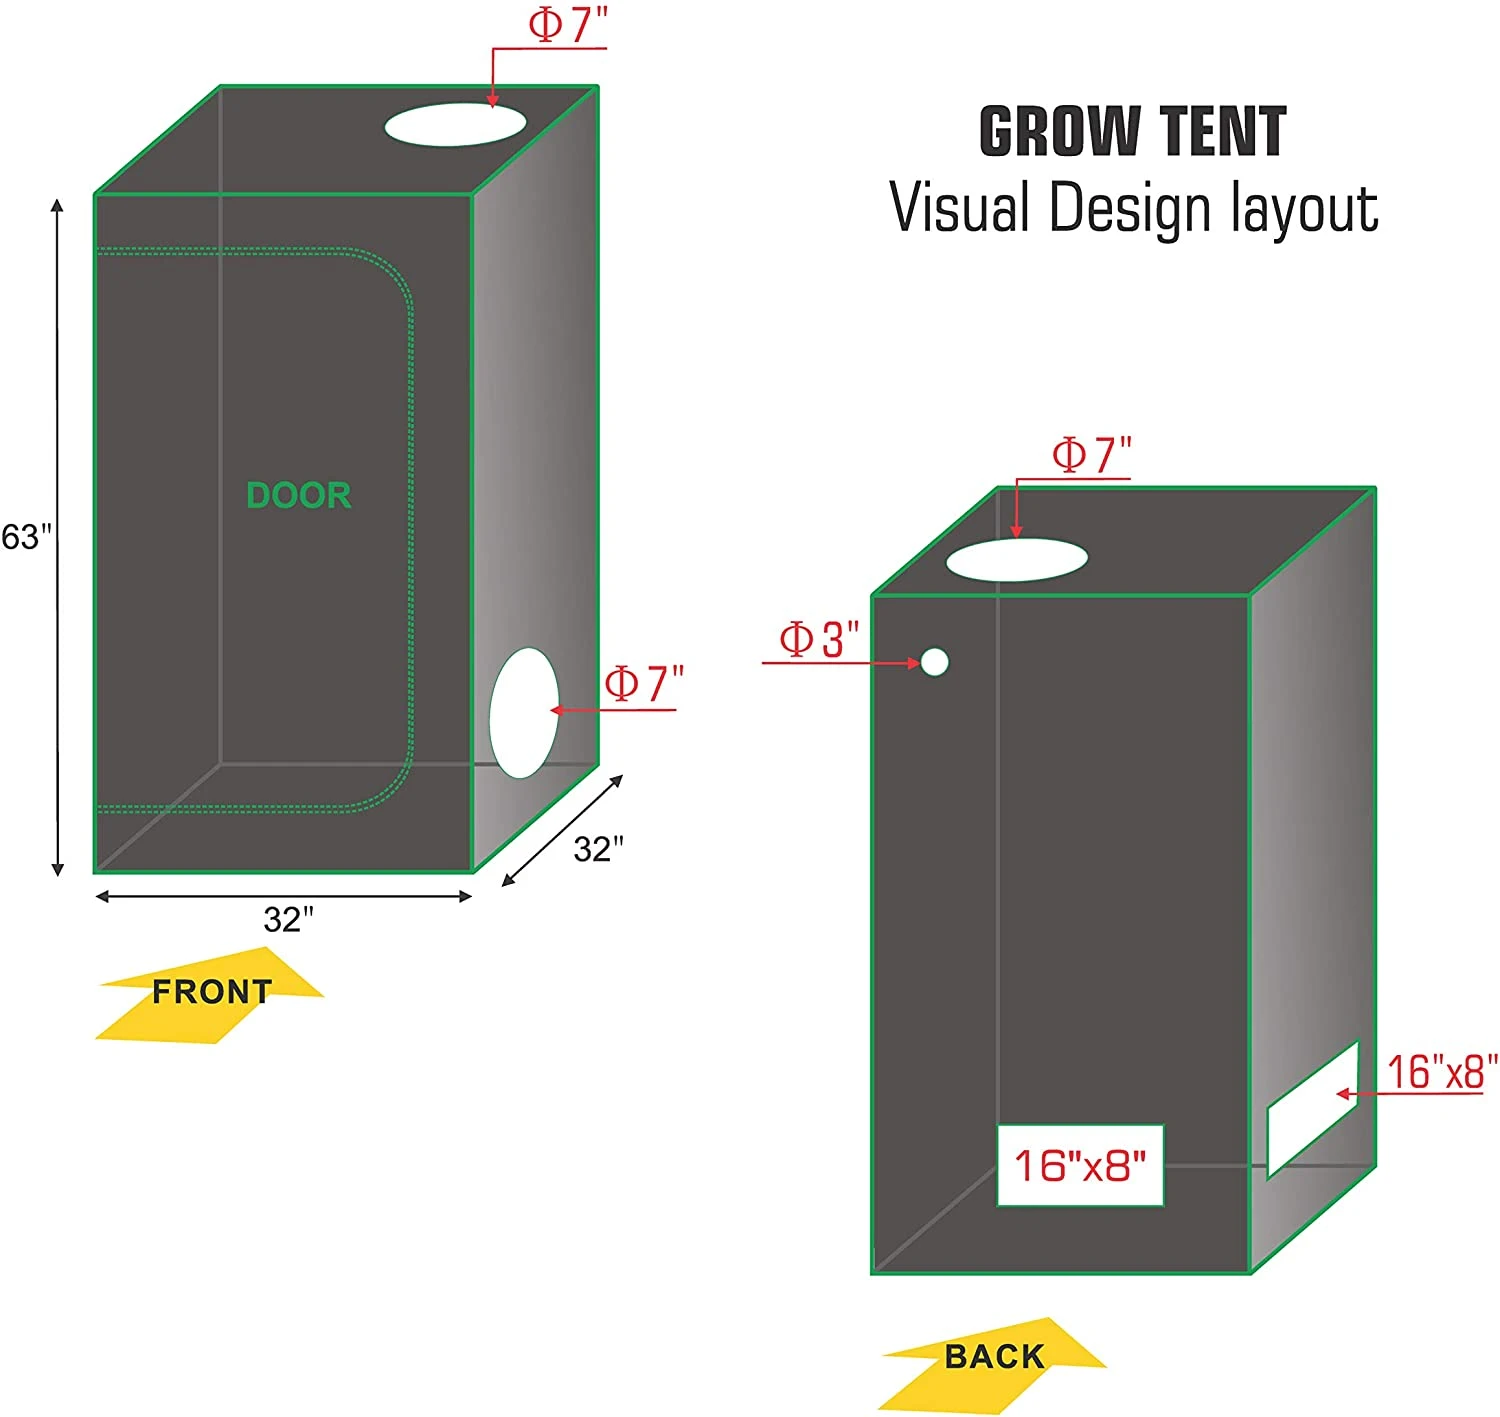 80x80x160cm, 32"x32"x63" grow tent hydroponics, indoor grow mushroom grow room